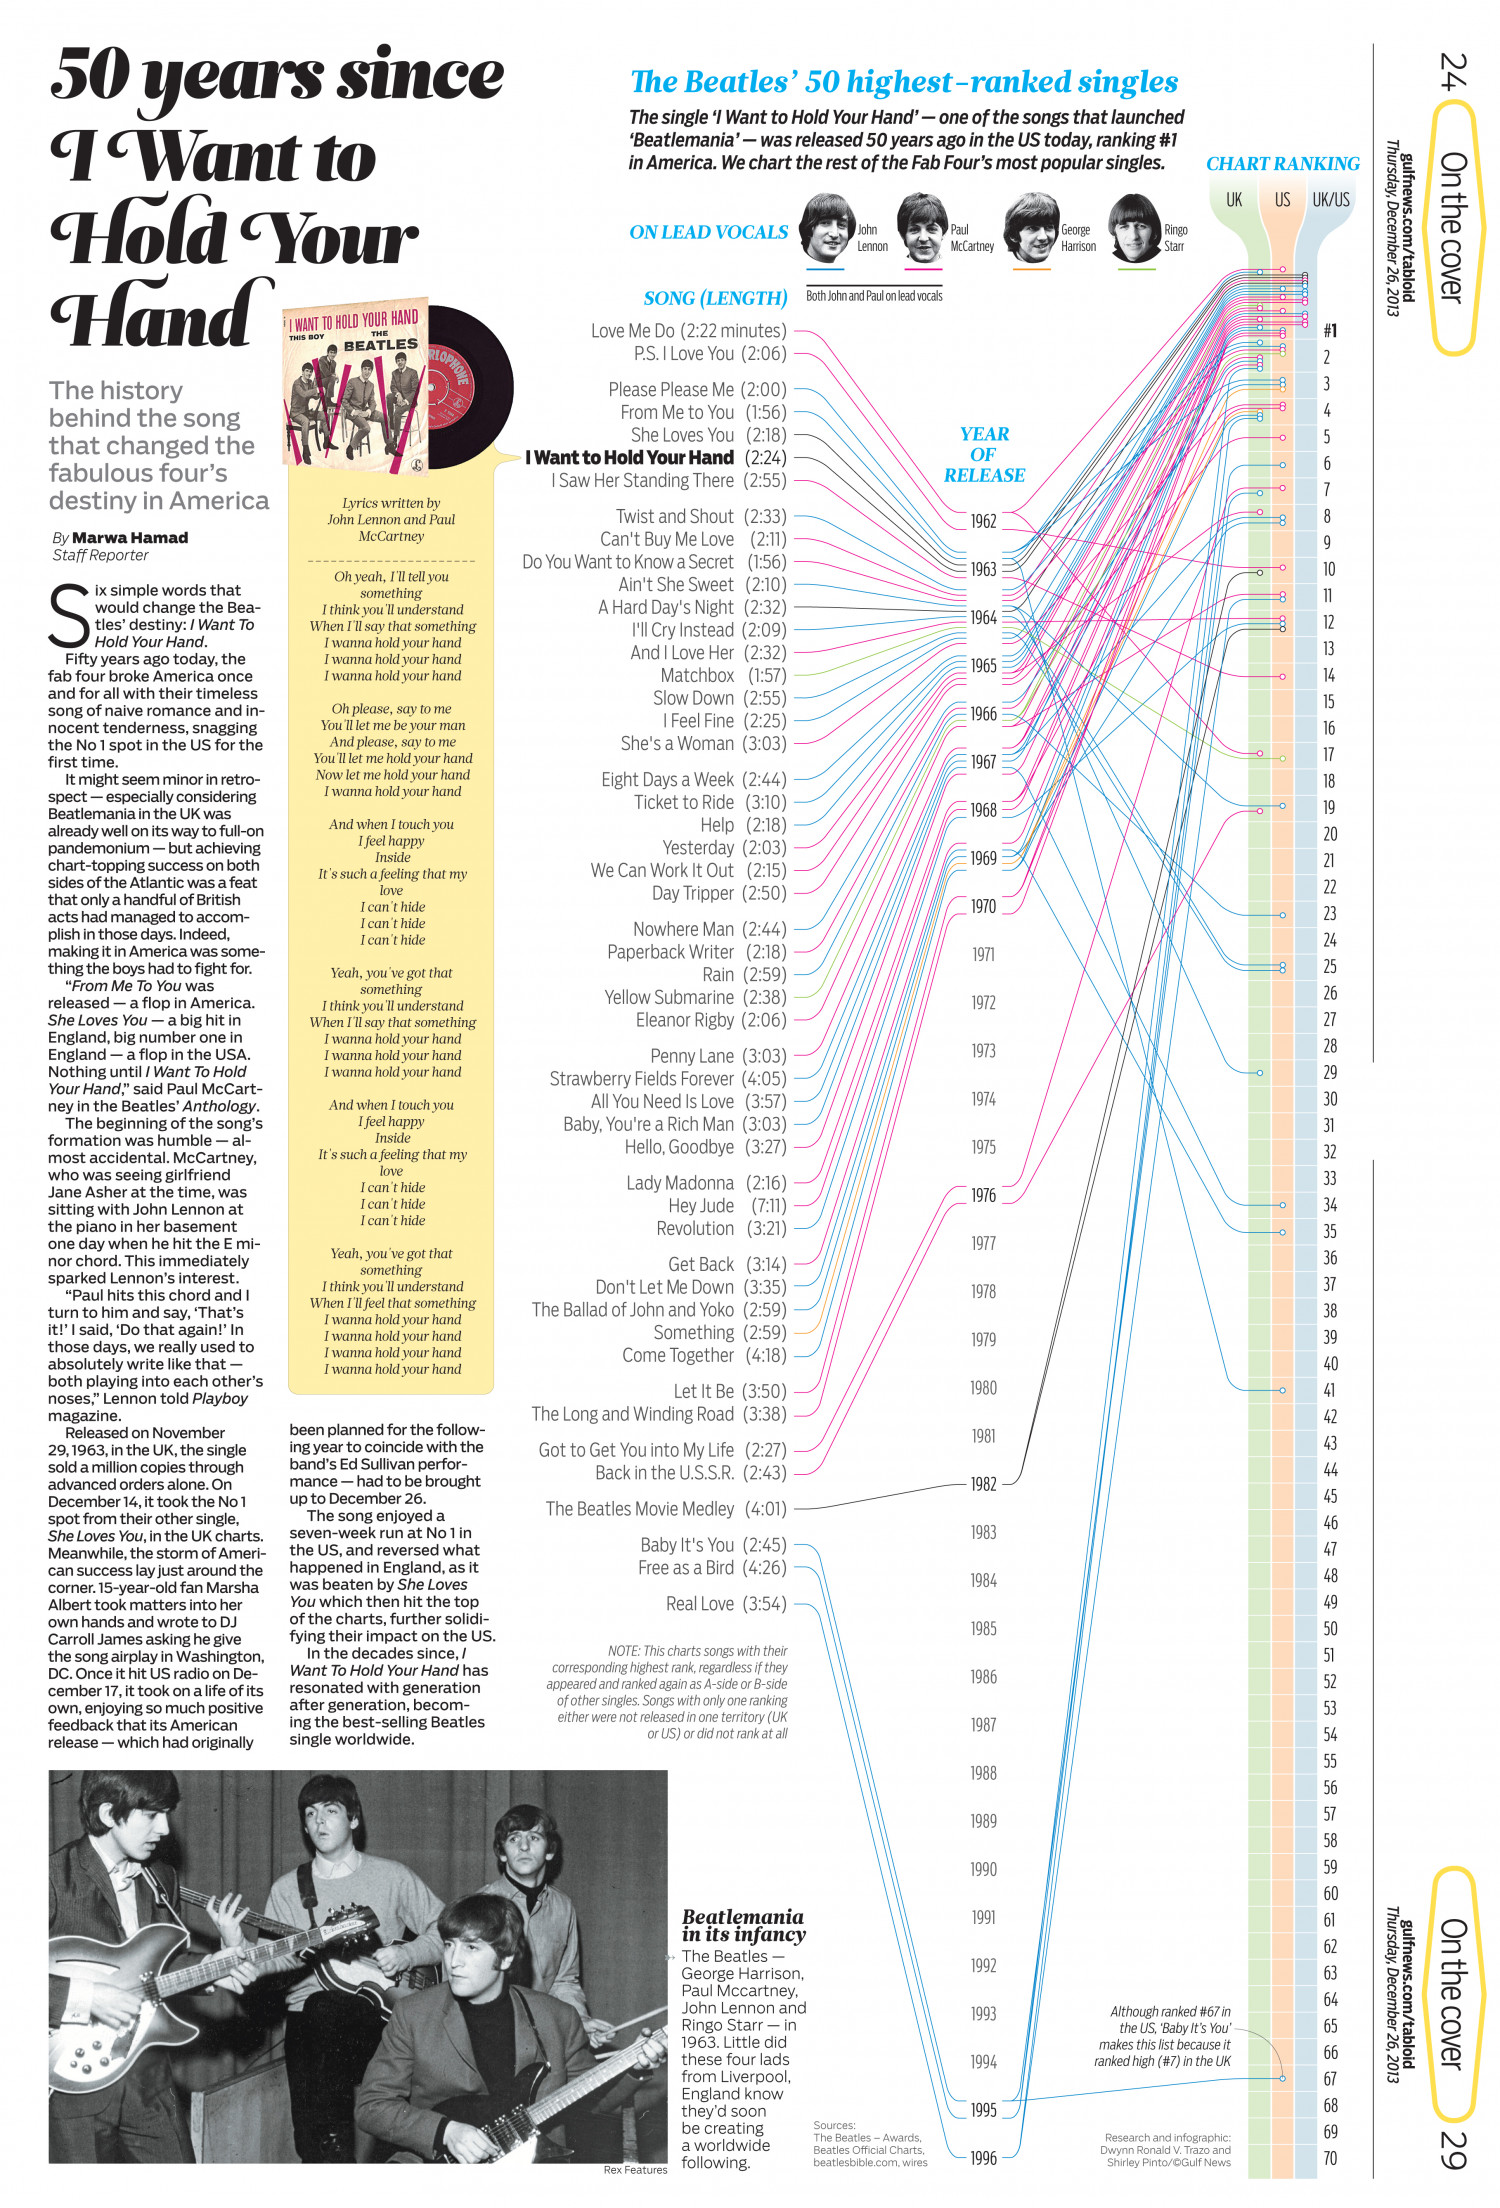 Beatles Top 50 singles Infographic